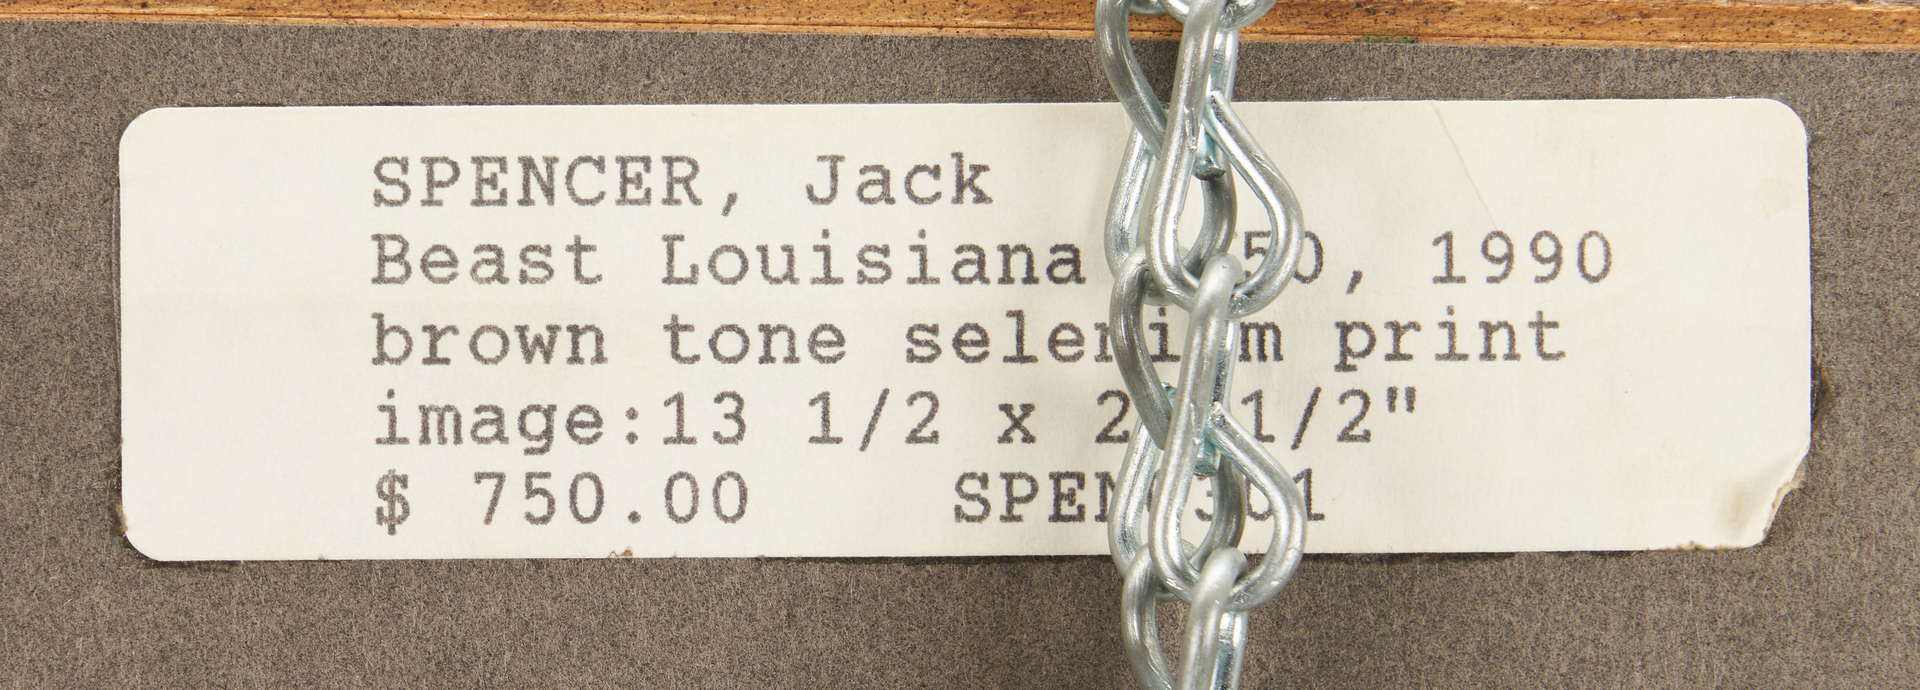 Lot 521: Jack Spencer Photograph, Beast Louisiana